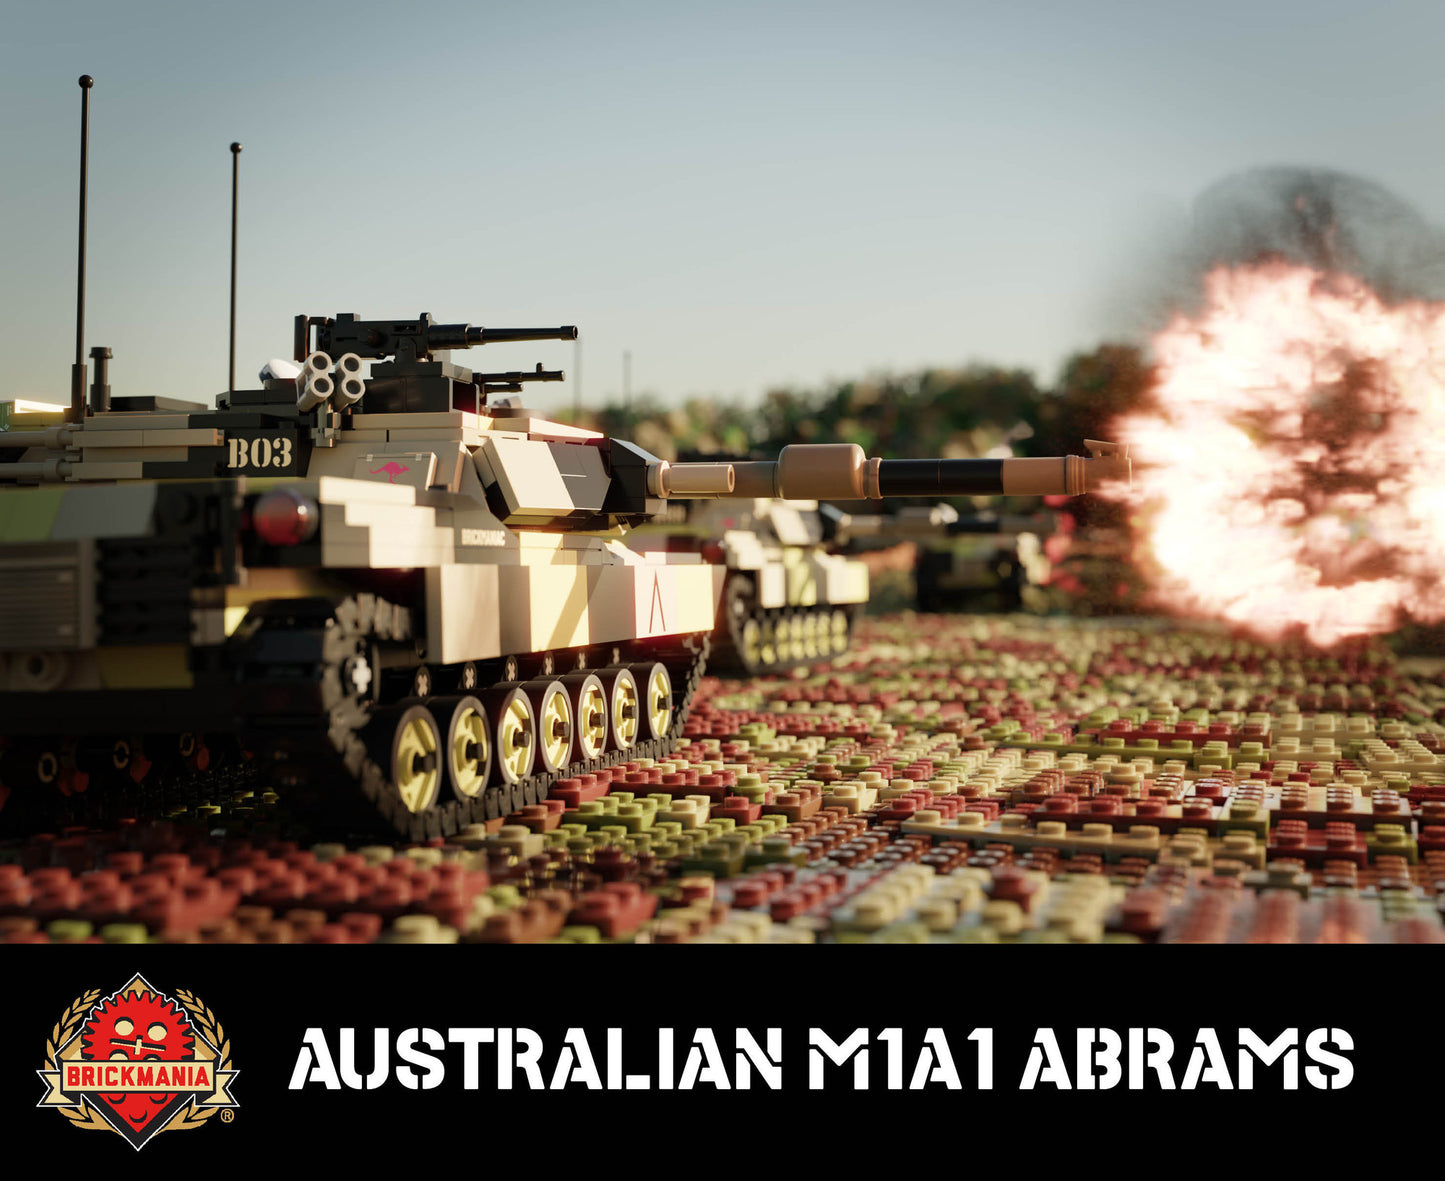 Load image into Gallery viewer, Australian M1A1 Abrams – Main Battle Tank
